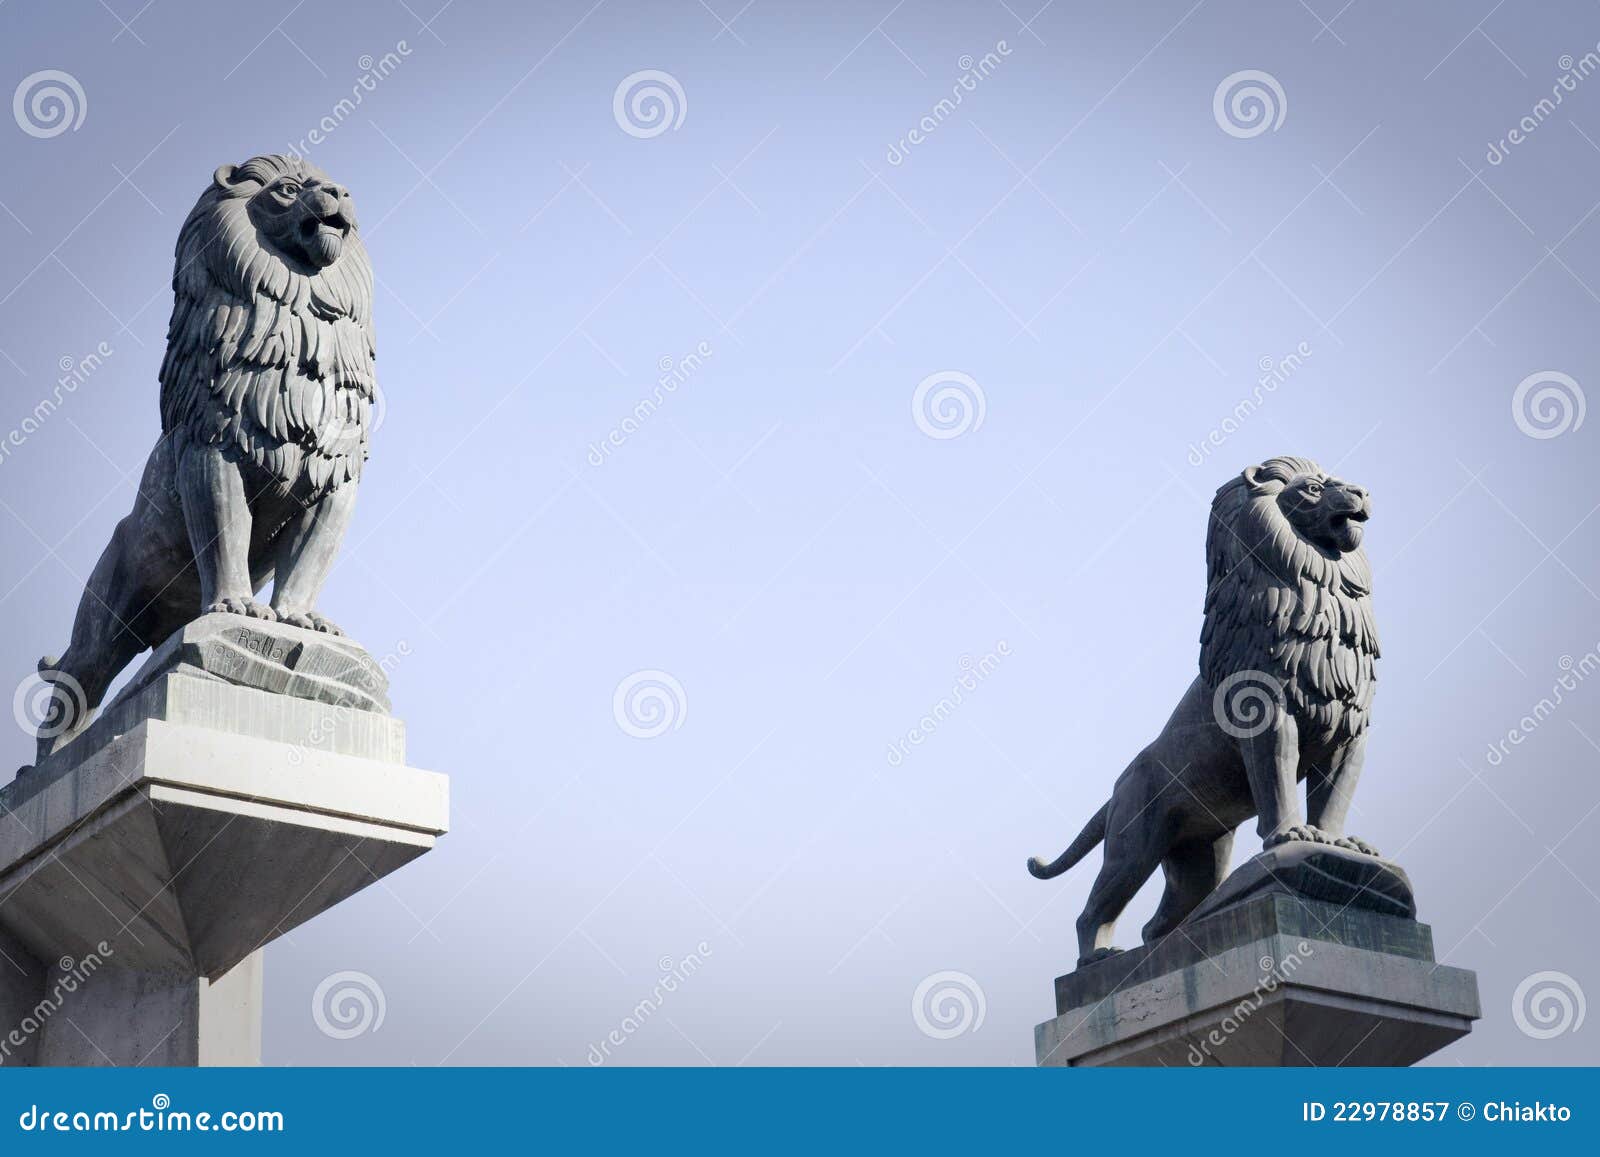 statues of lions in zaragoza, spain